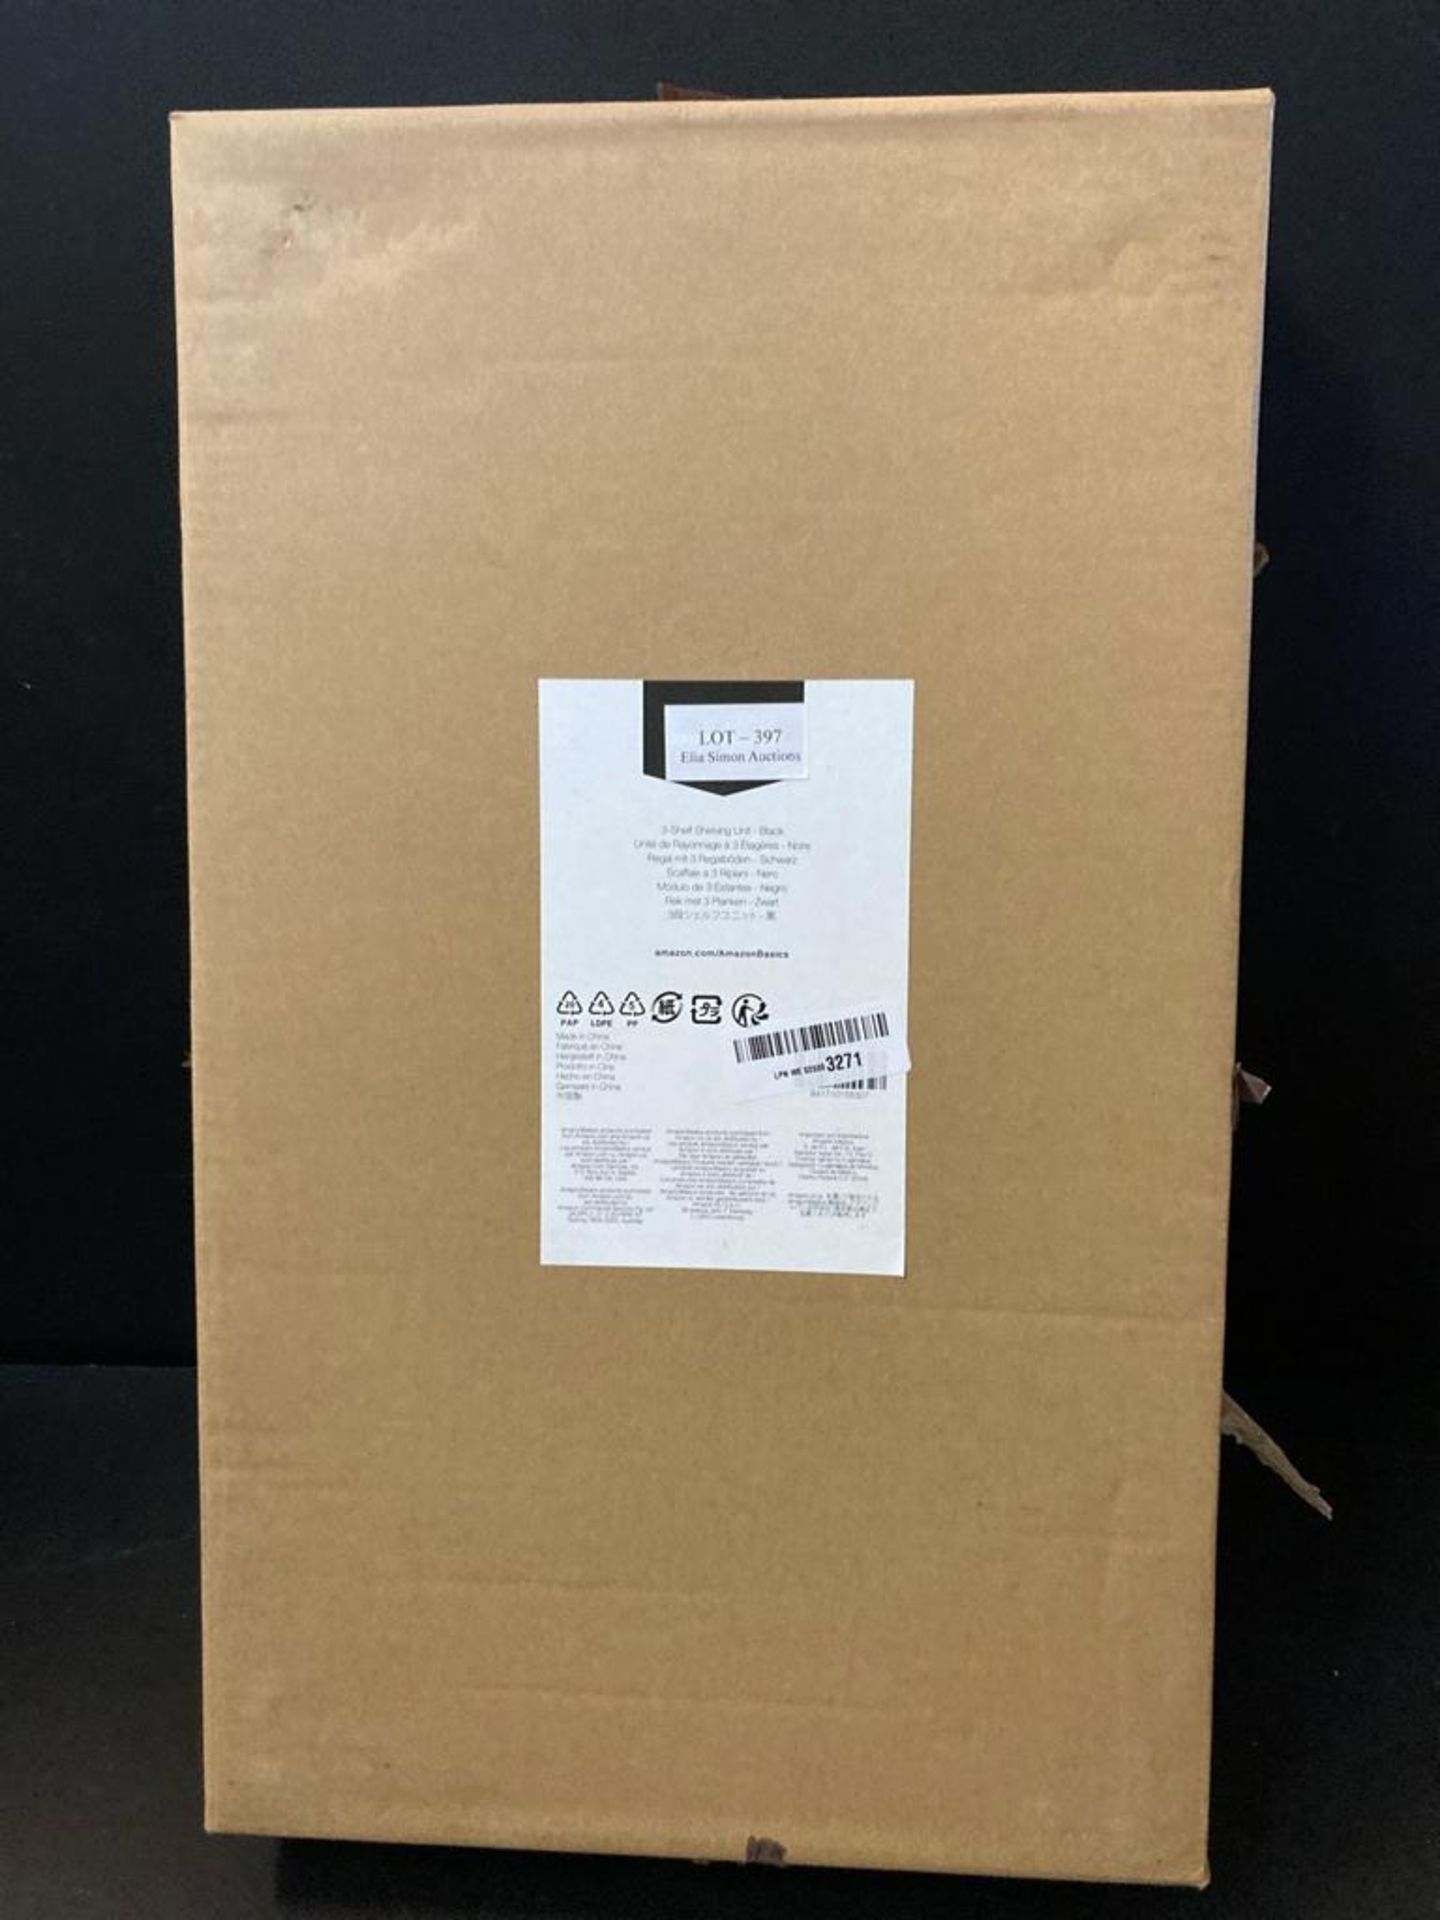 AmazonBasics 3-Shelf Shelving Unit, up to 115 kg per shelf, Black - Image 2 of 2